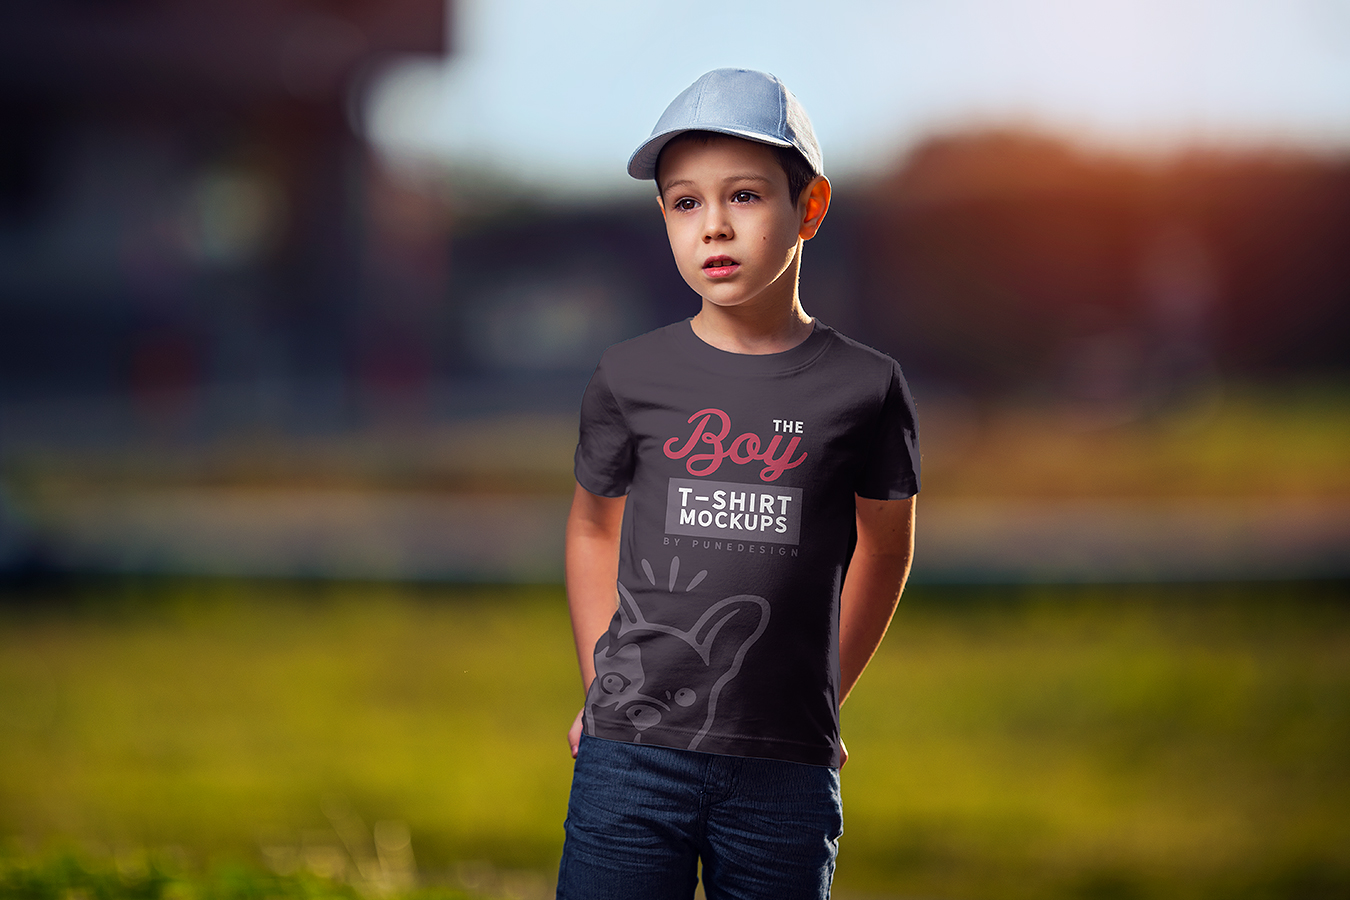 Boy-T-Shirt-Mockup-By-PuneDesign